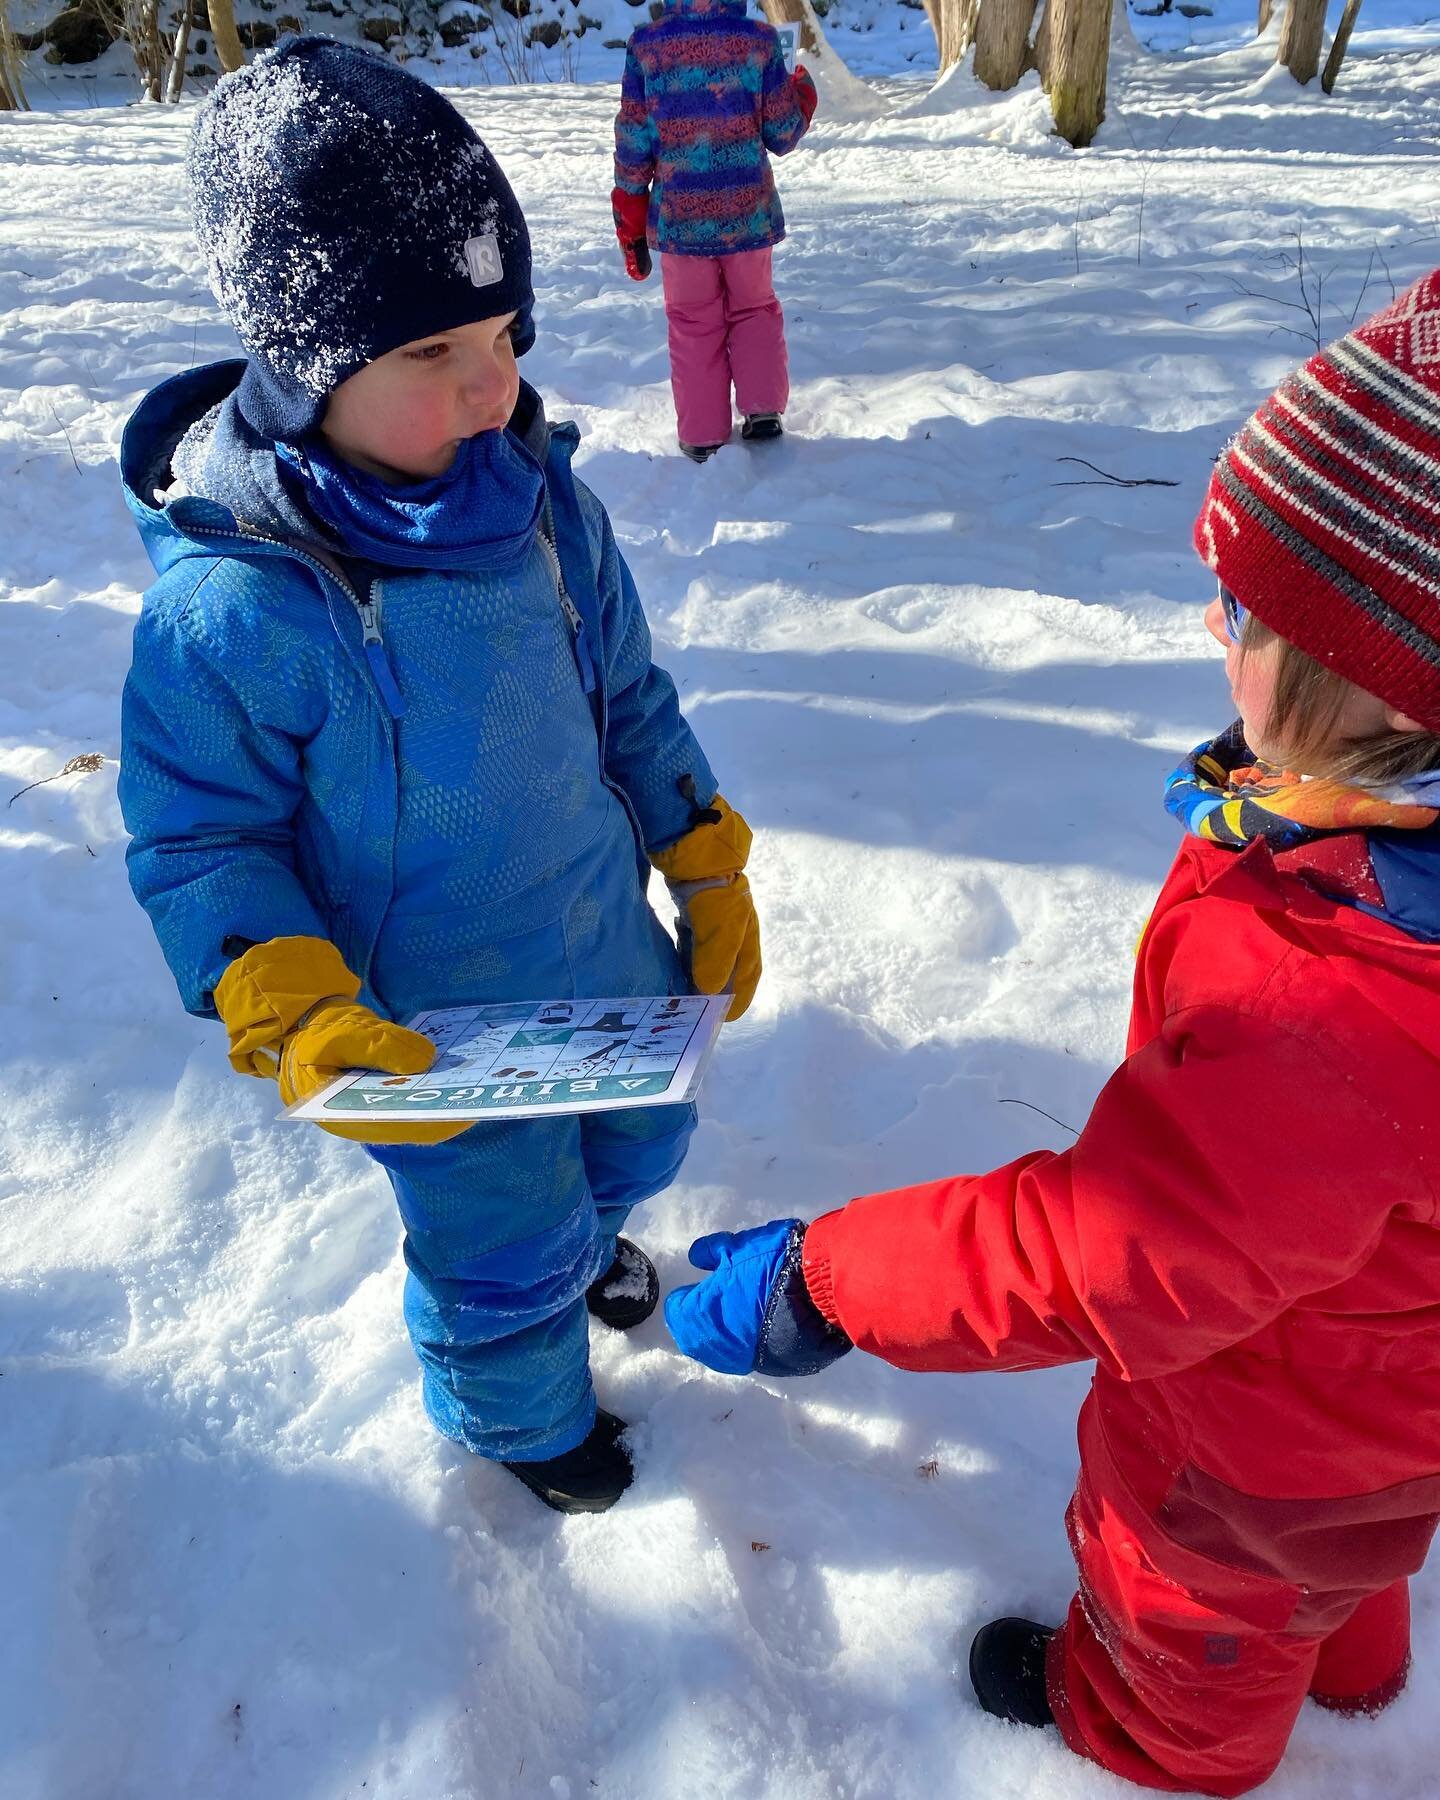 A winter themed scavenger hunt is a good way to keep warm on a cold day!
.
.
.
#naturekindergarten #forestschool #rowantreechildrensschool